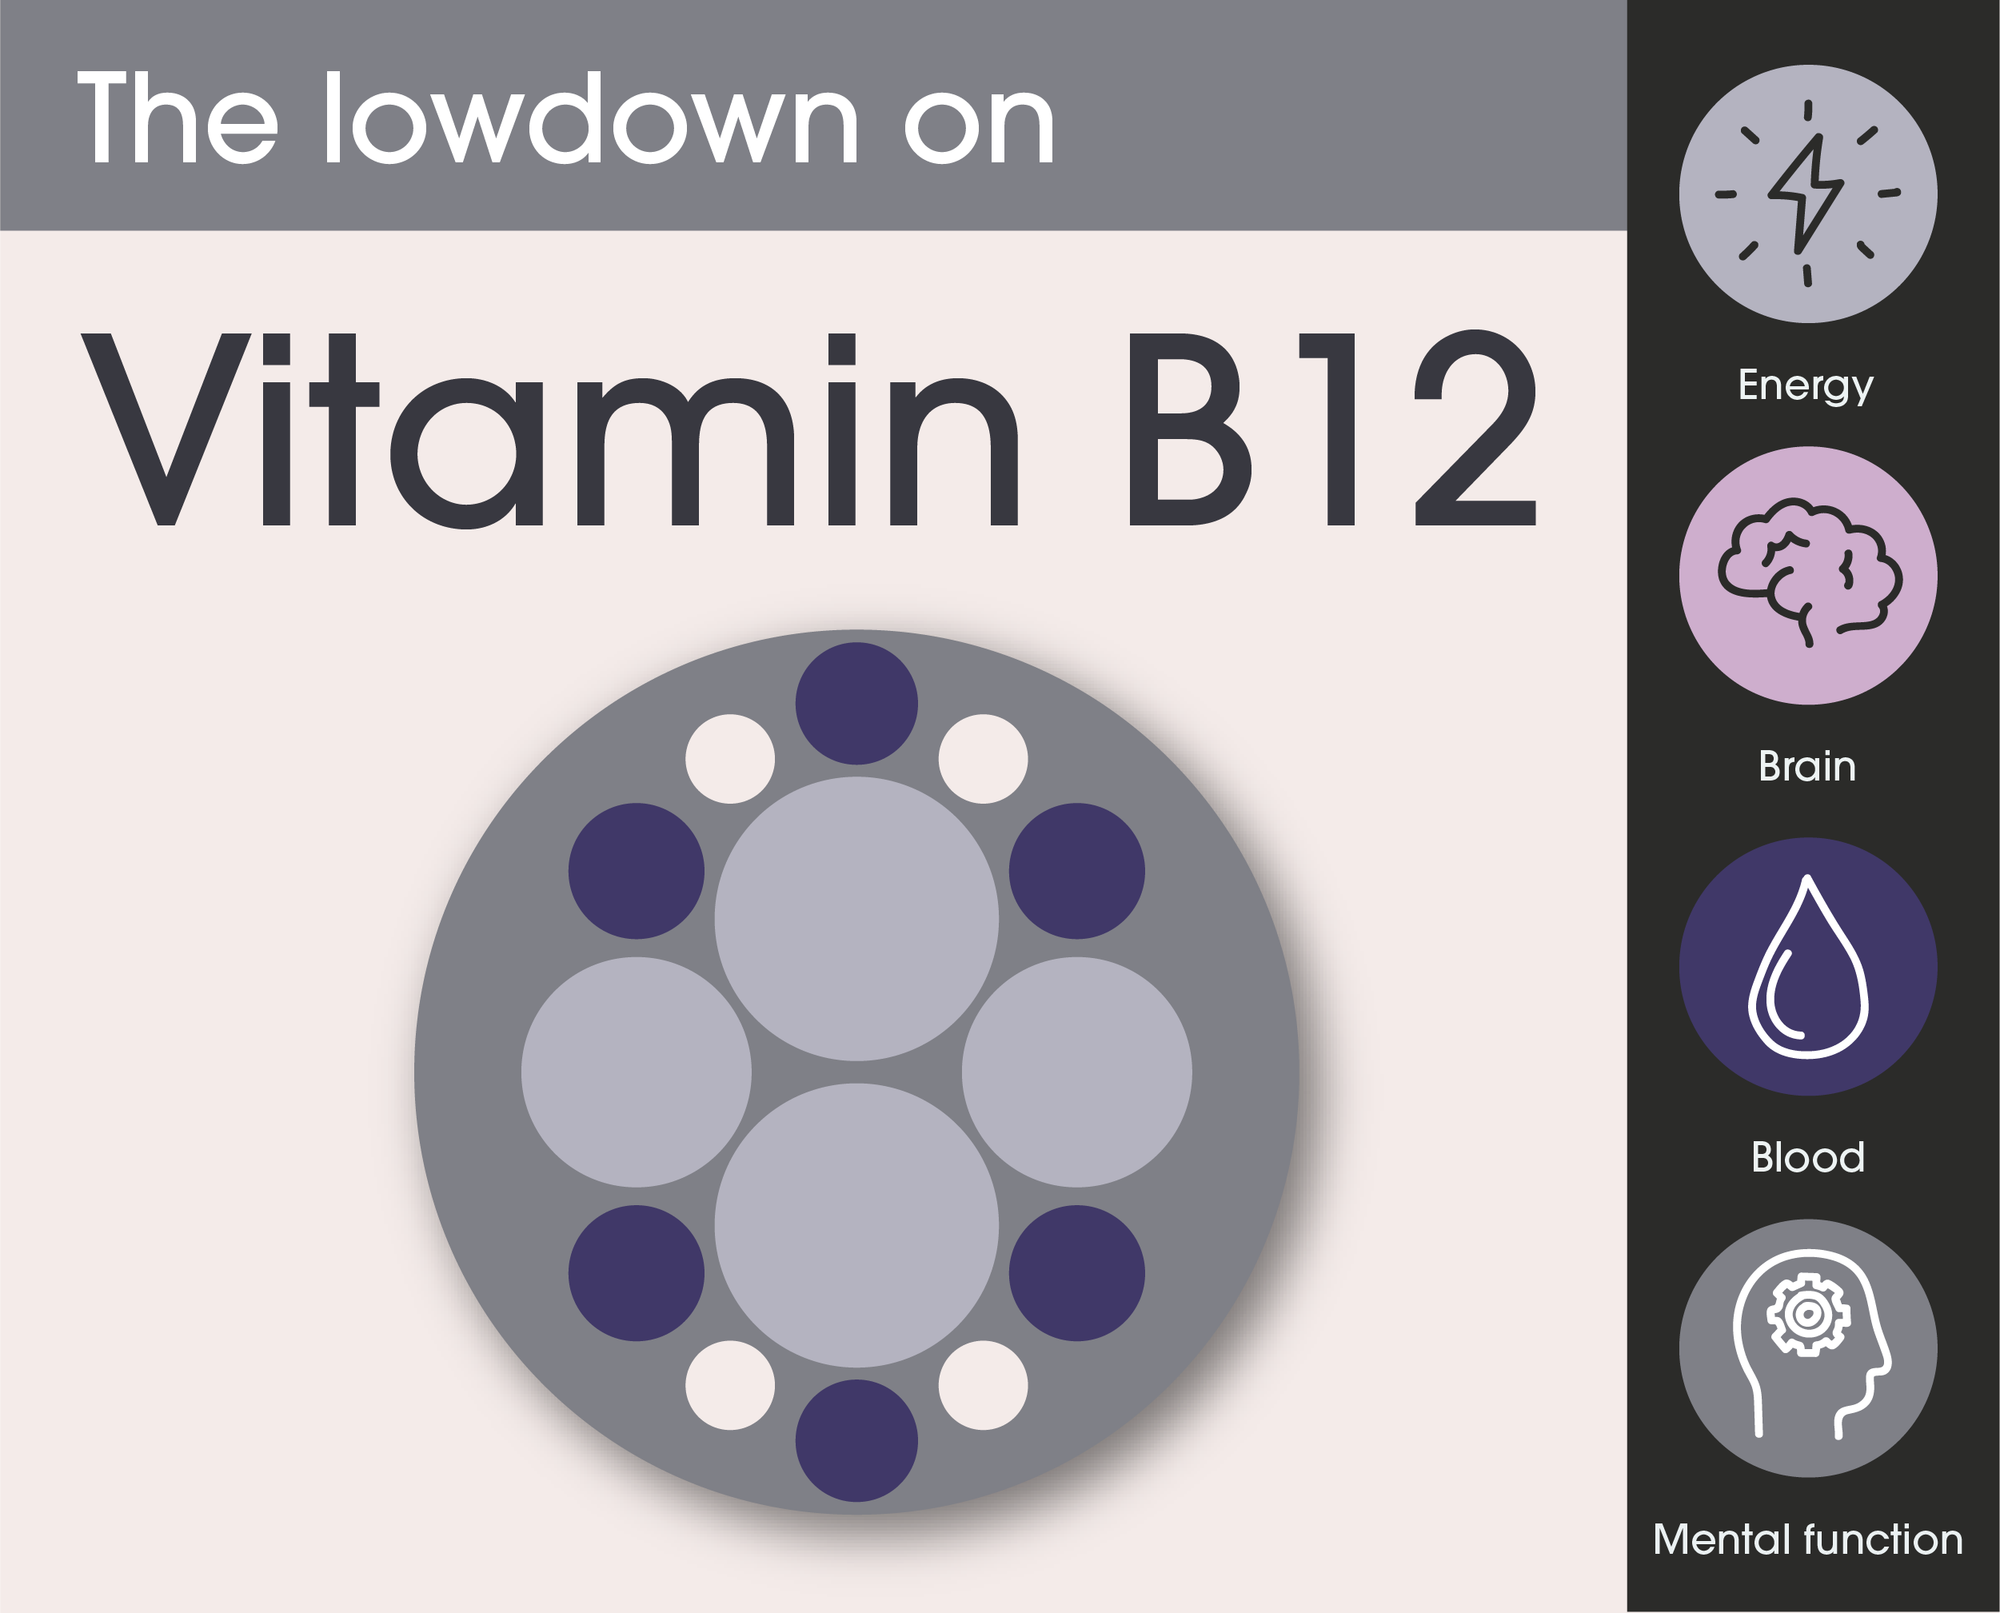 The lowdown on Vitamin B12